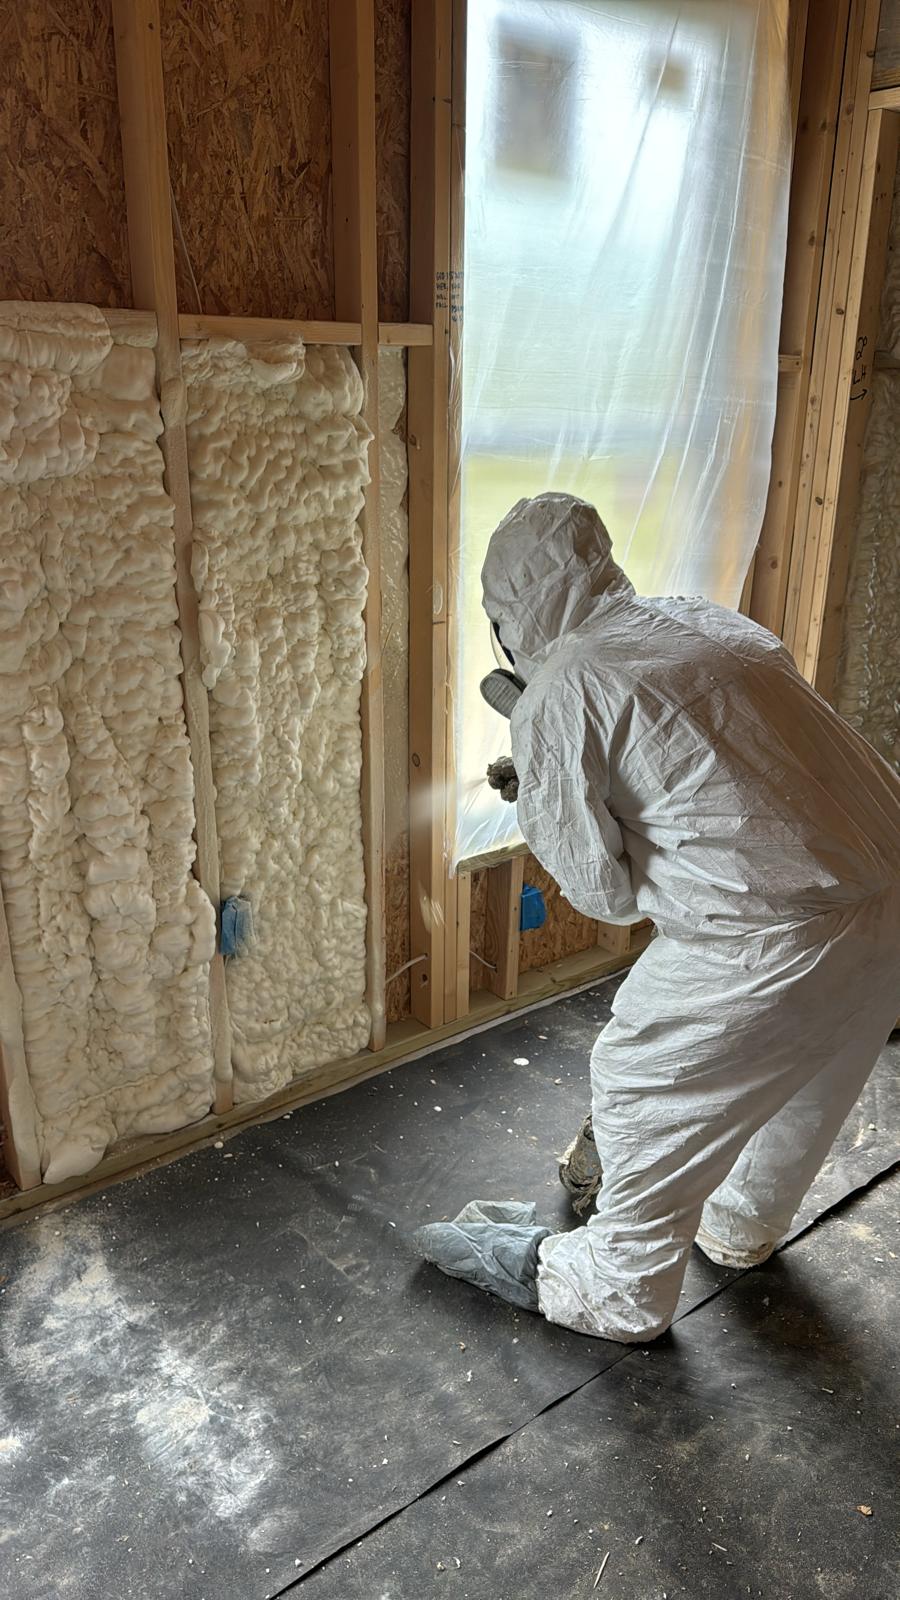 Open Cell Spray Foam Insulation Installed In Walls of House In Hammond, LA